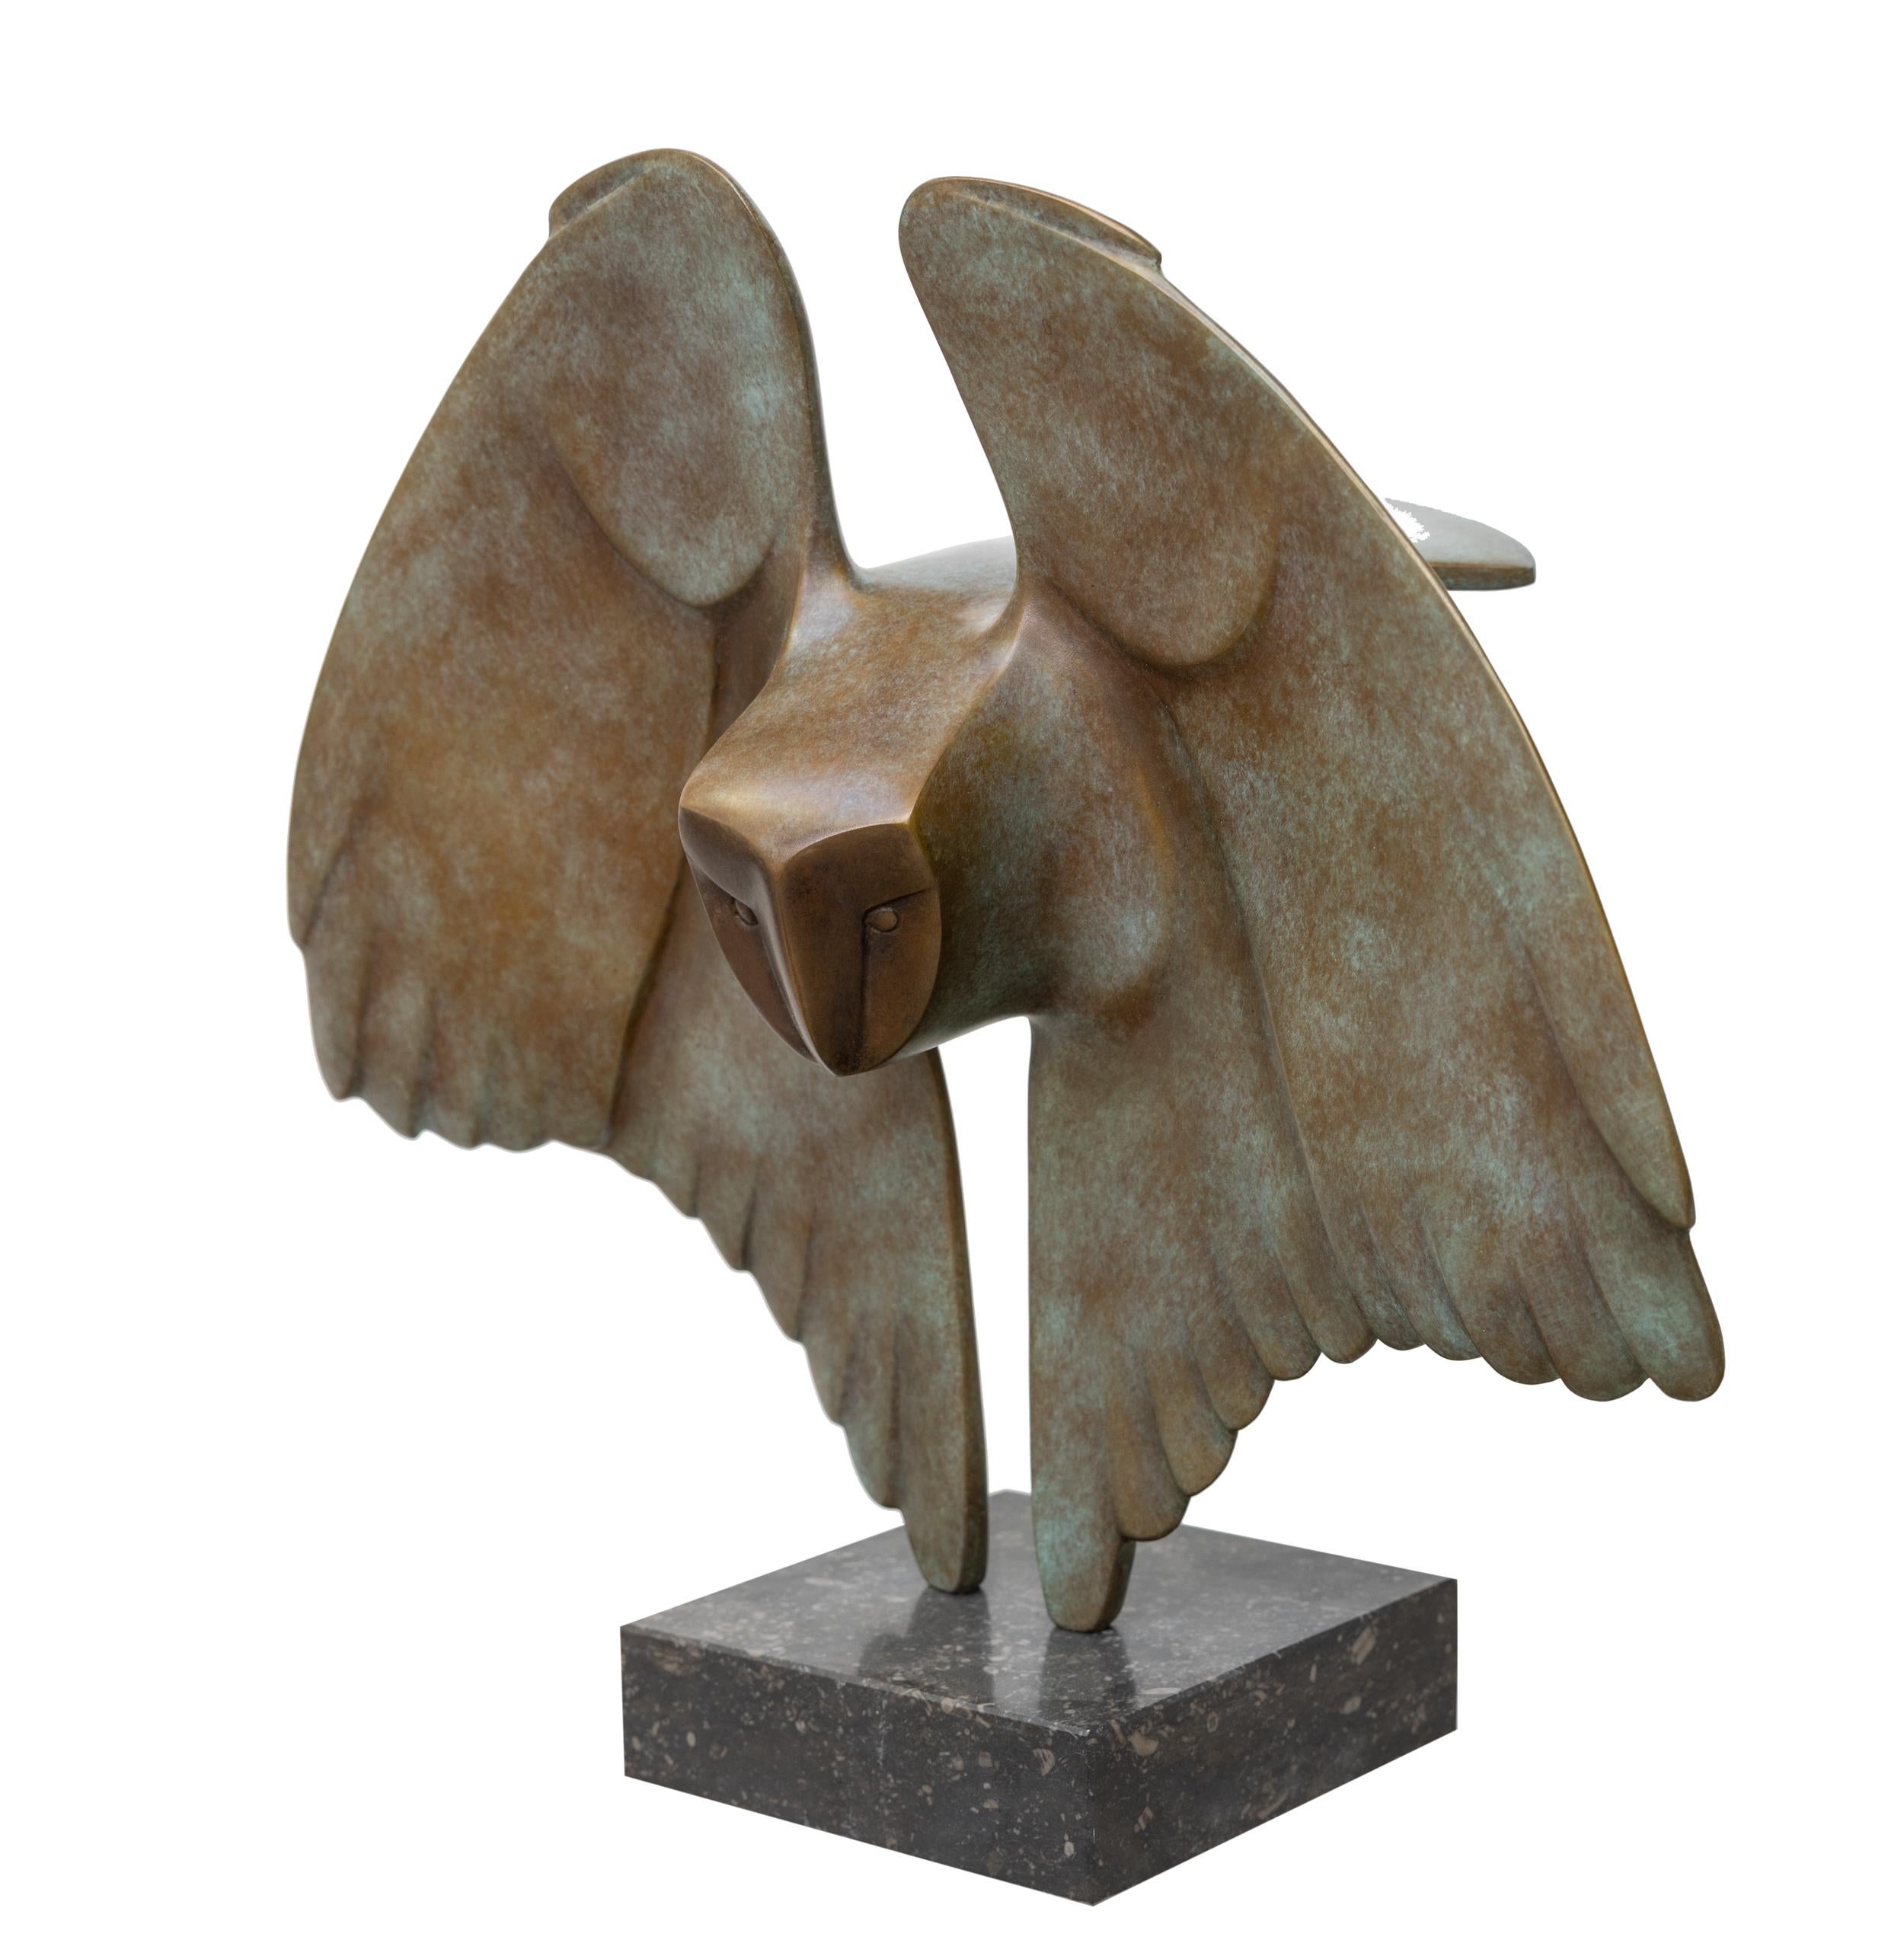 Evert den Hartog Figurative Sculpture - Vliegende Uil no. 7 Flying Owl Bird Bronze Sculpture Limited Edition In Stock